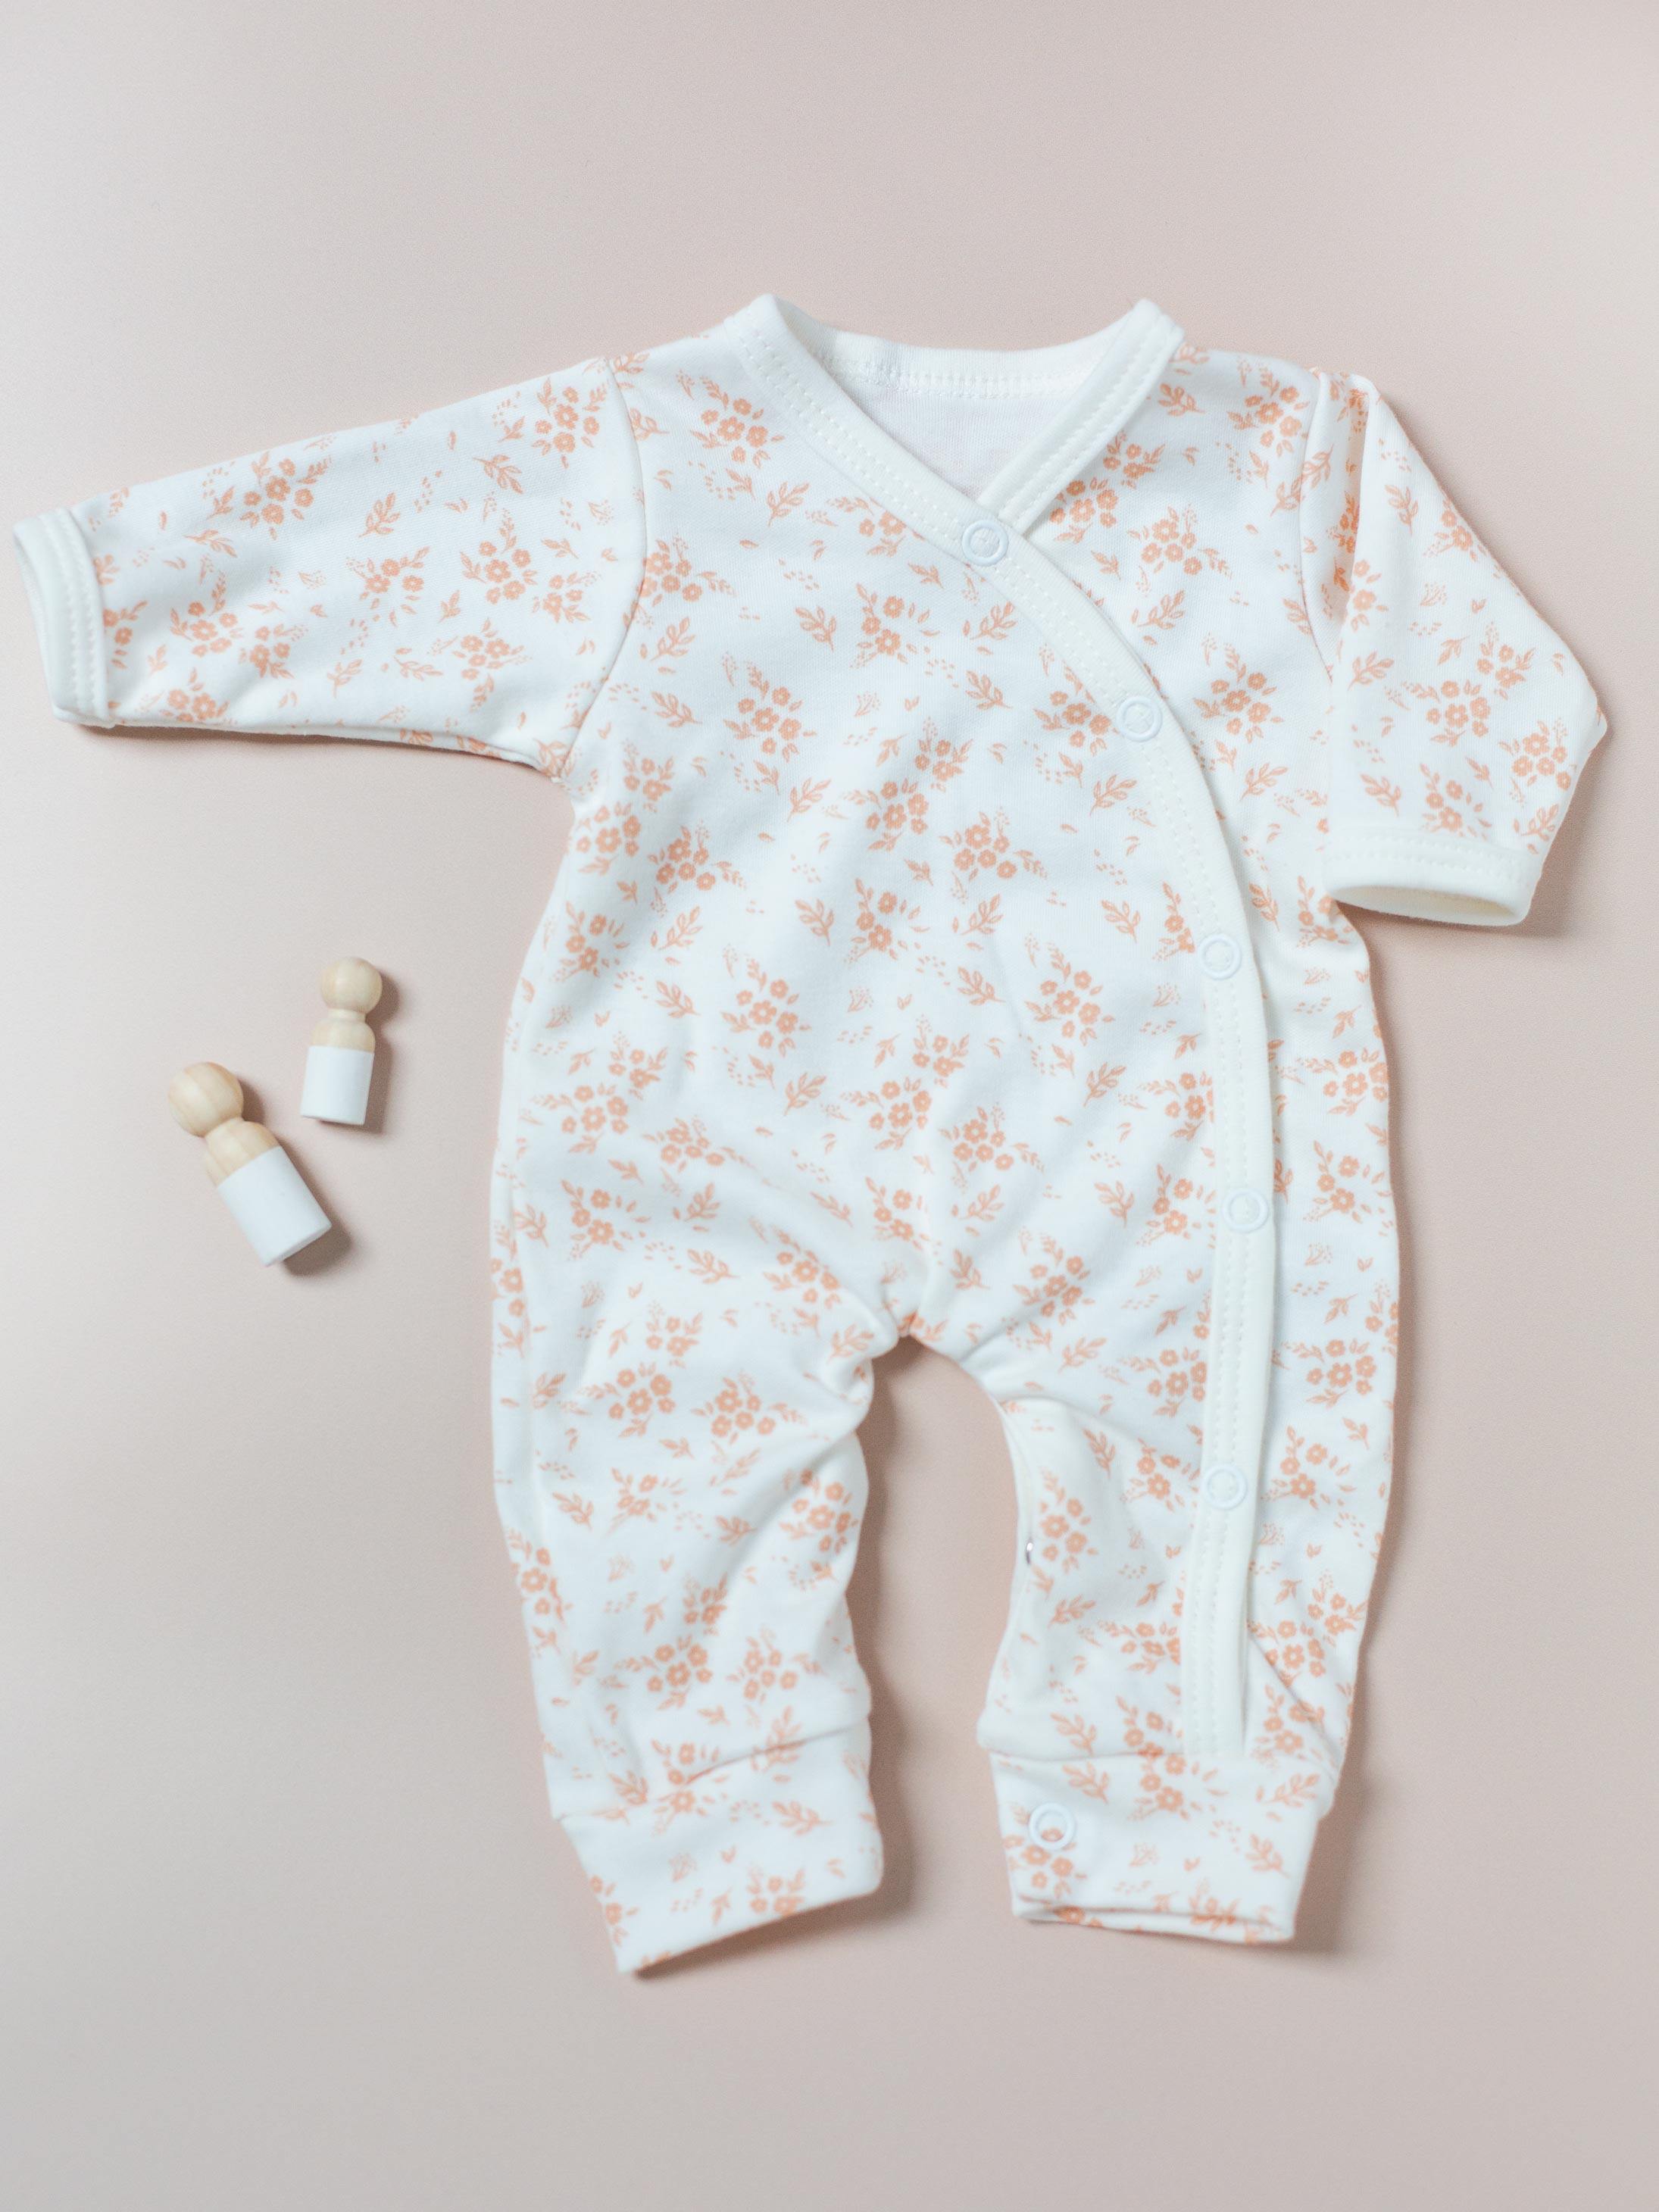 Sleepsuit, Apricot Floral, Premium 100% Organic Cotton Sleepsuit / Babygrow Tiny & Small 